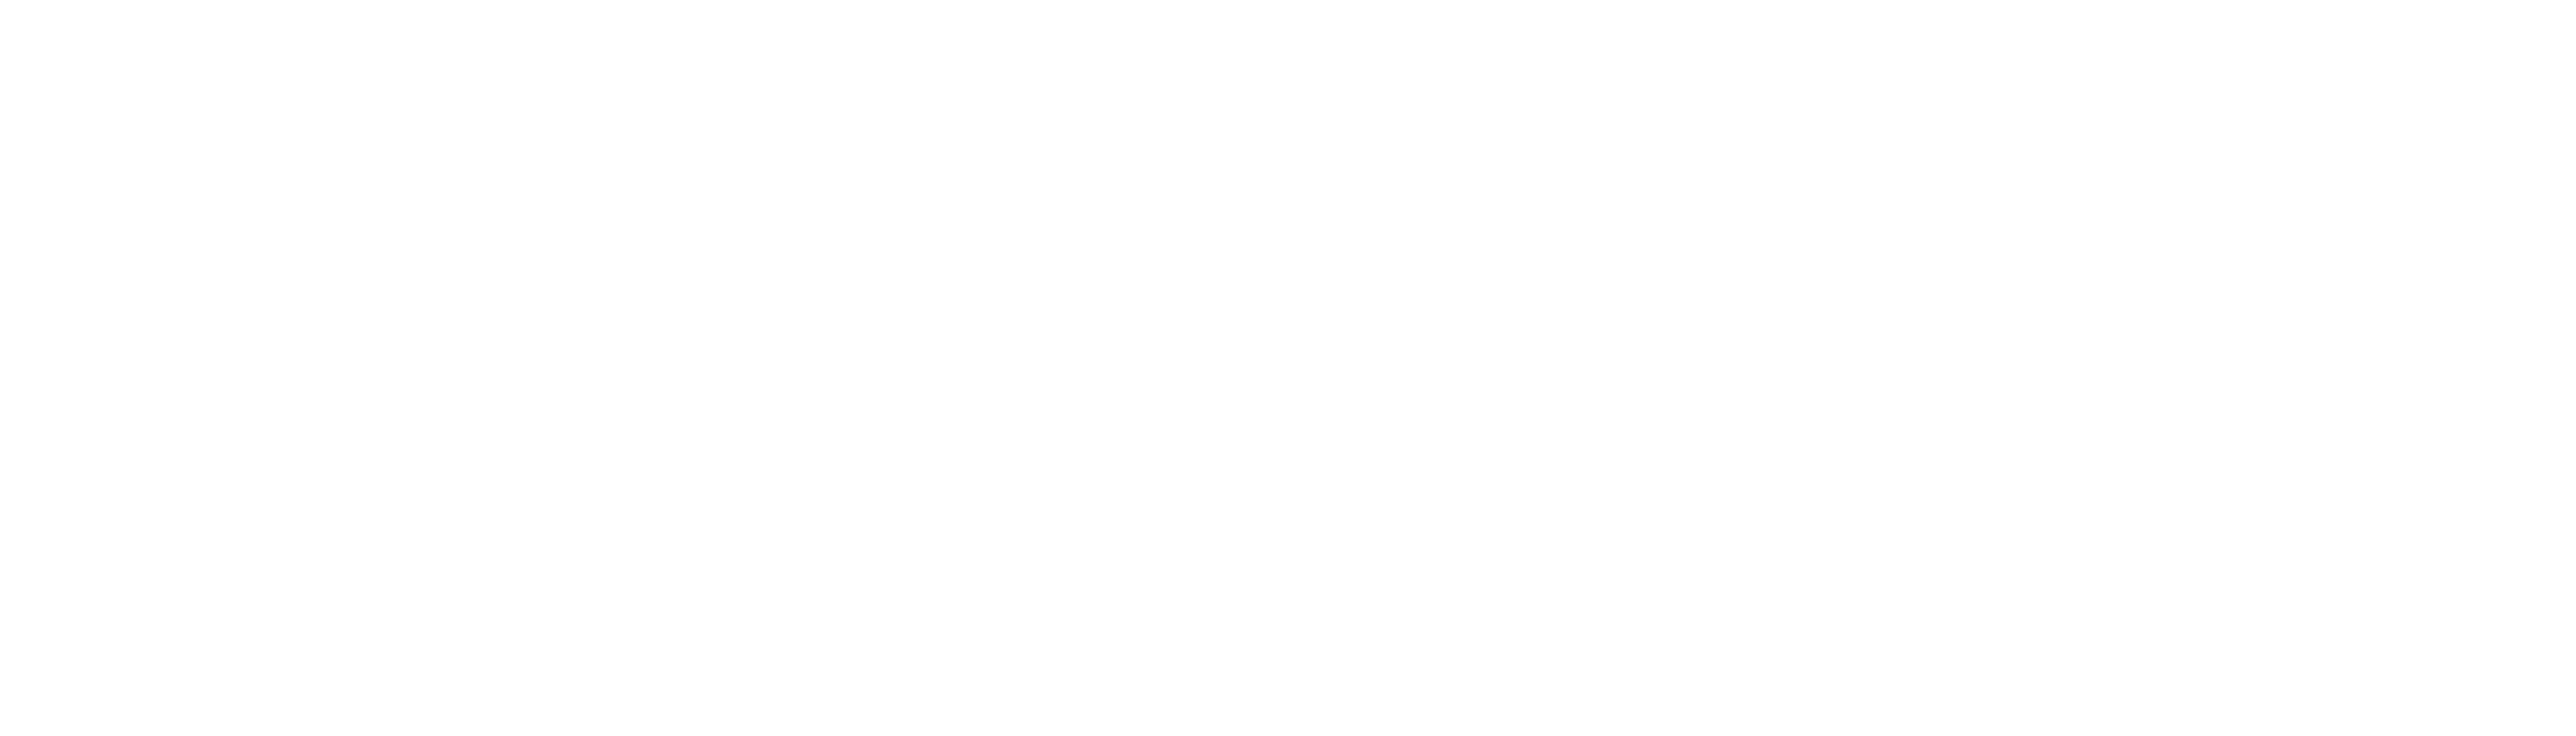 Appic Media